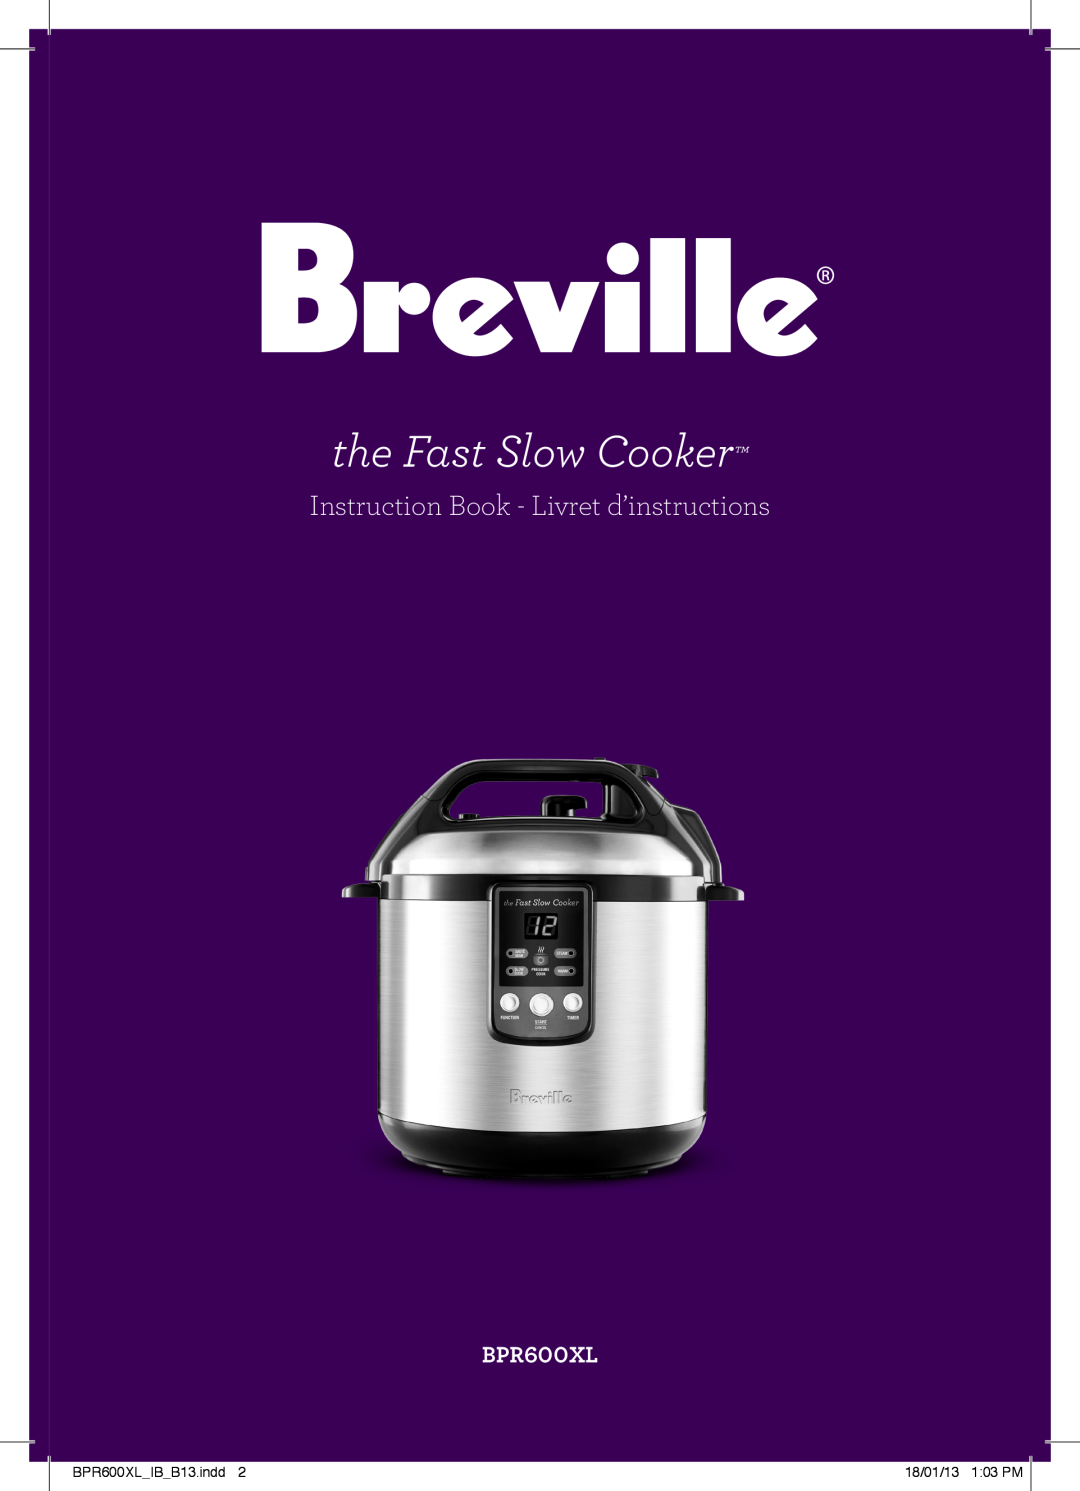 Breville manual the Fast Slow Cooker, Instruction Book - Livret d’instructions, BPR600XLIBB13.indd, 18/01/13 103 PM 